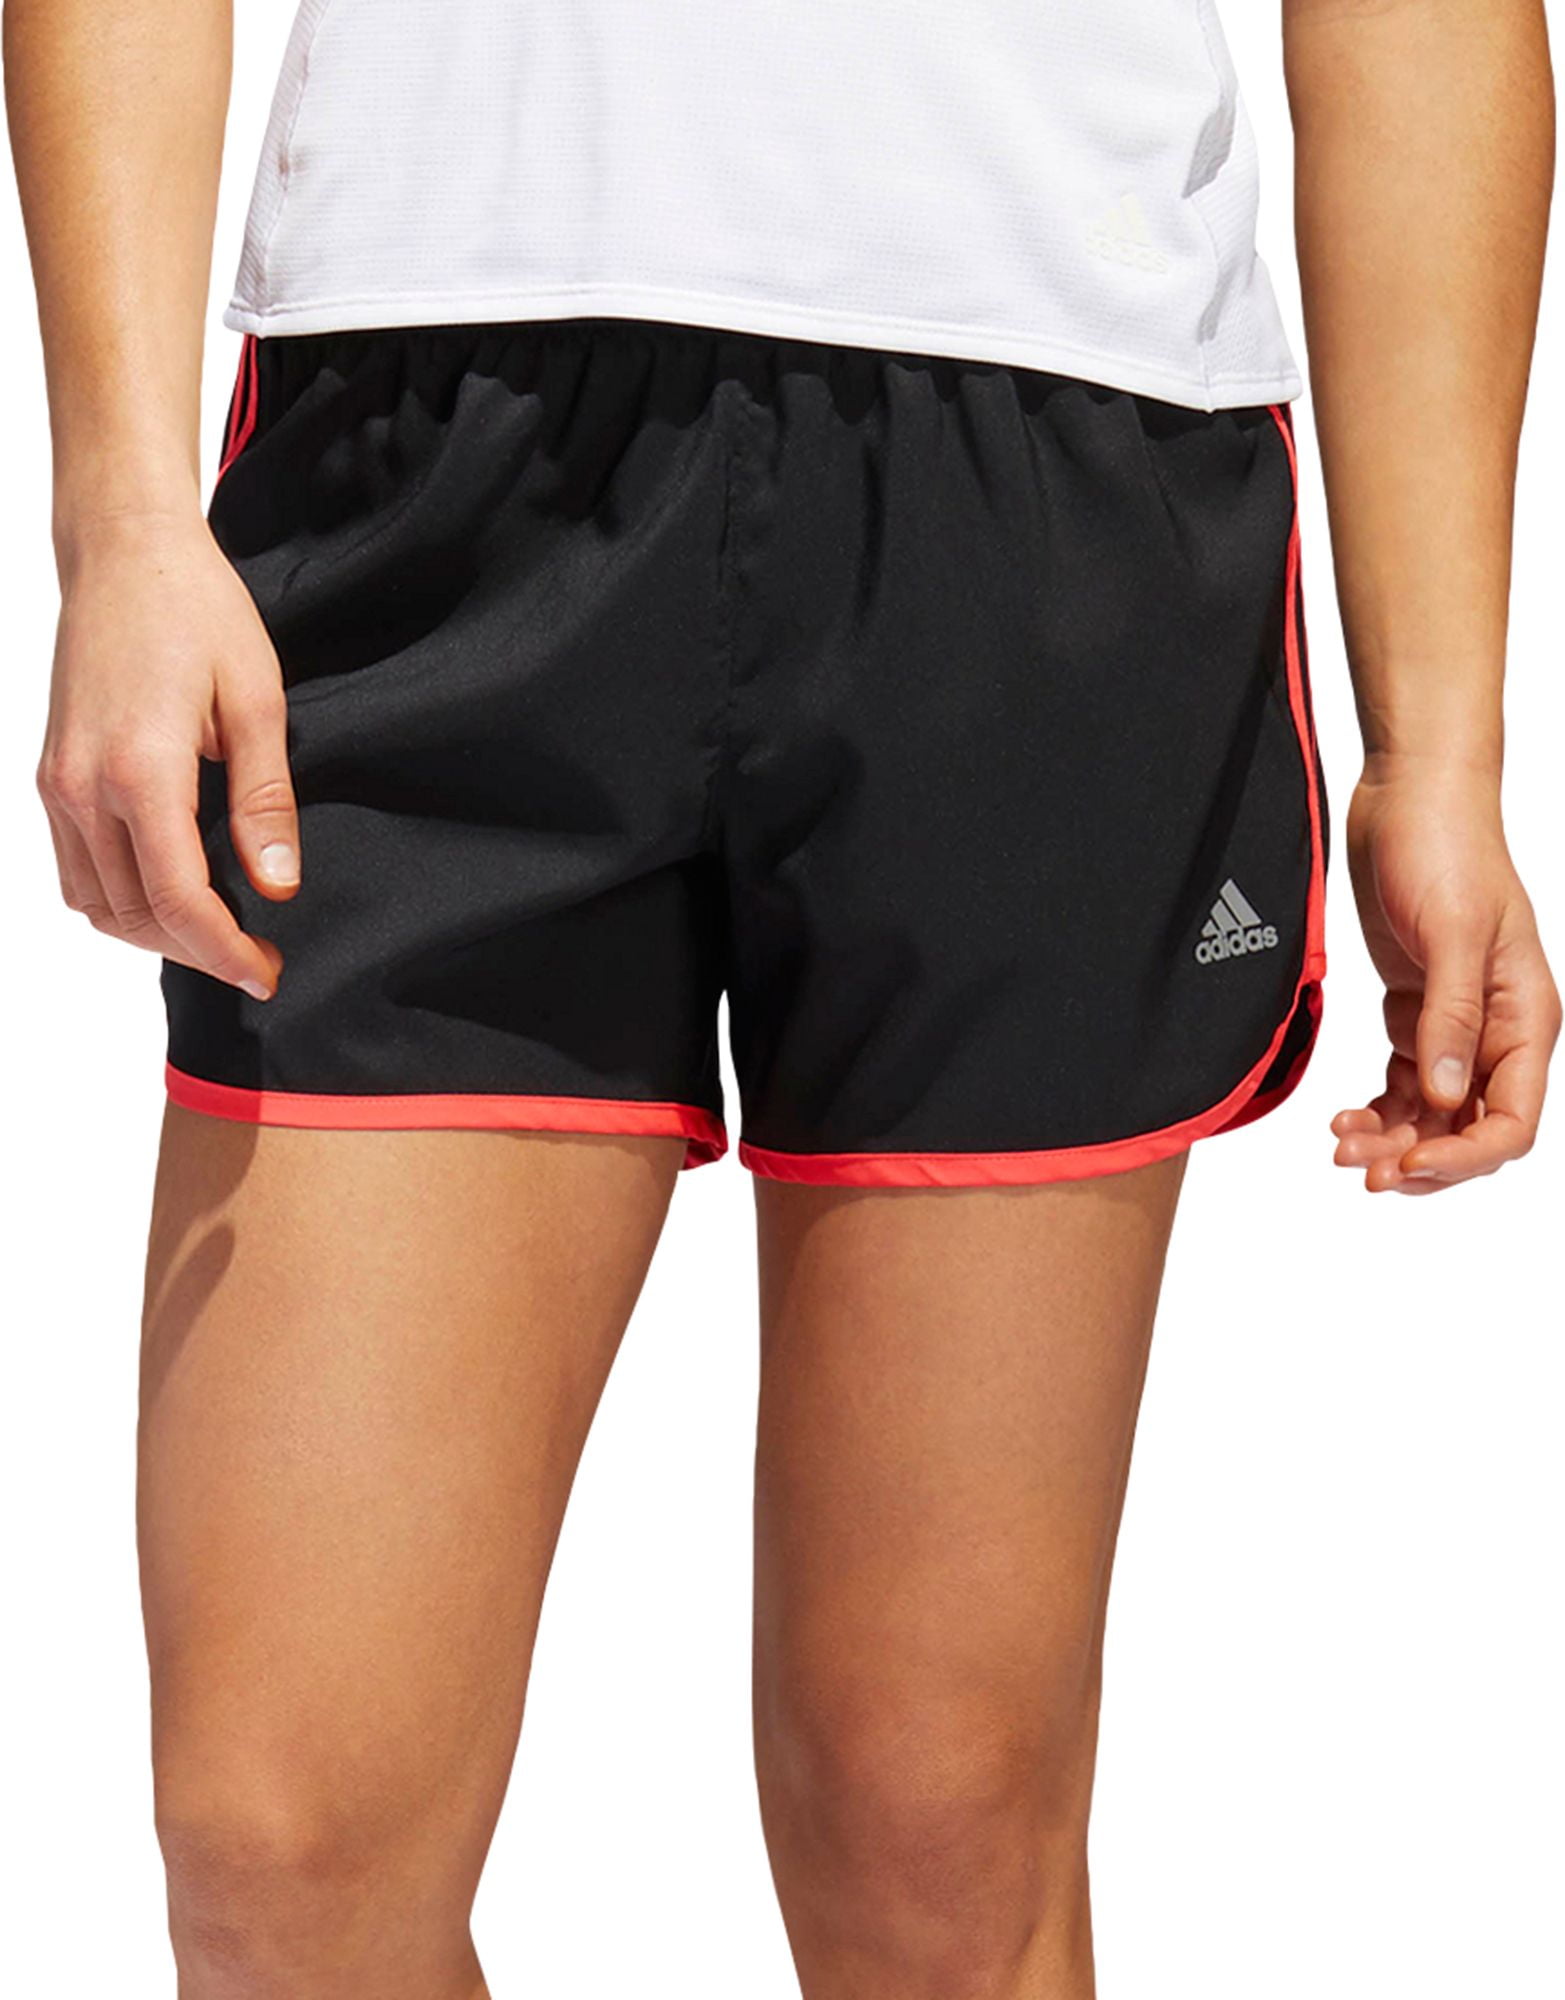 adidas women's marathon 20 running shorts